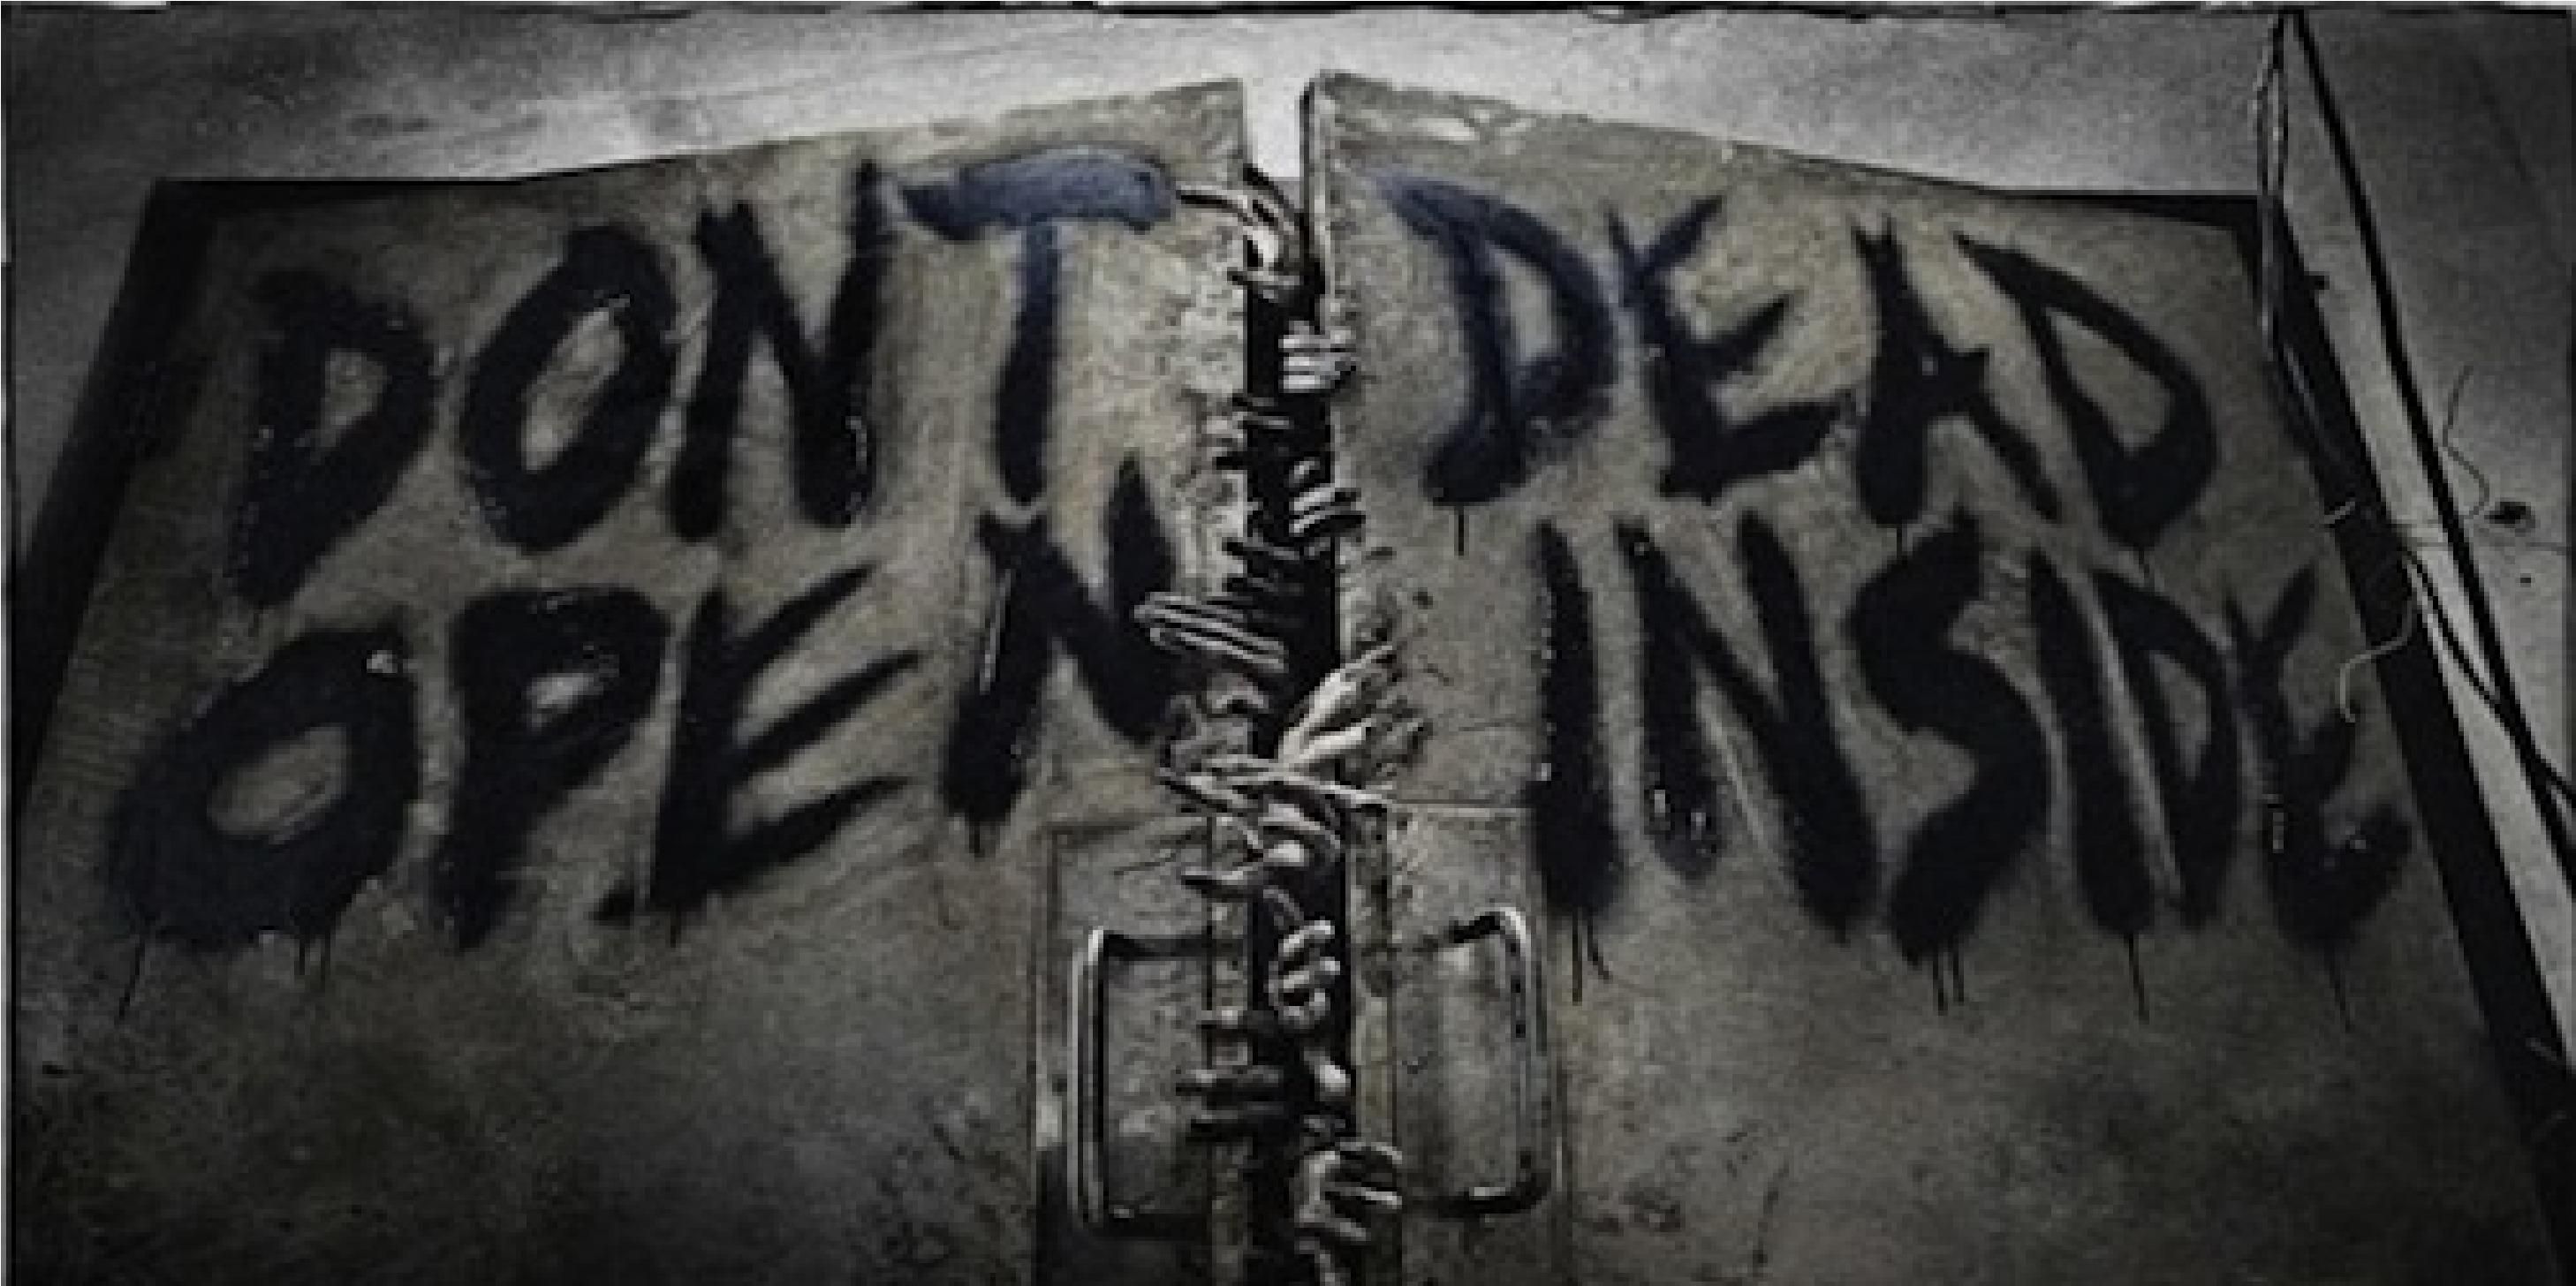 The Walking Dead Wallpaper HD Background Images | HD Wallpapers Range